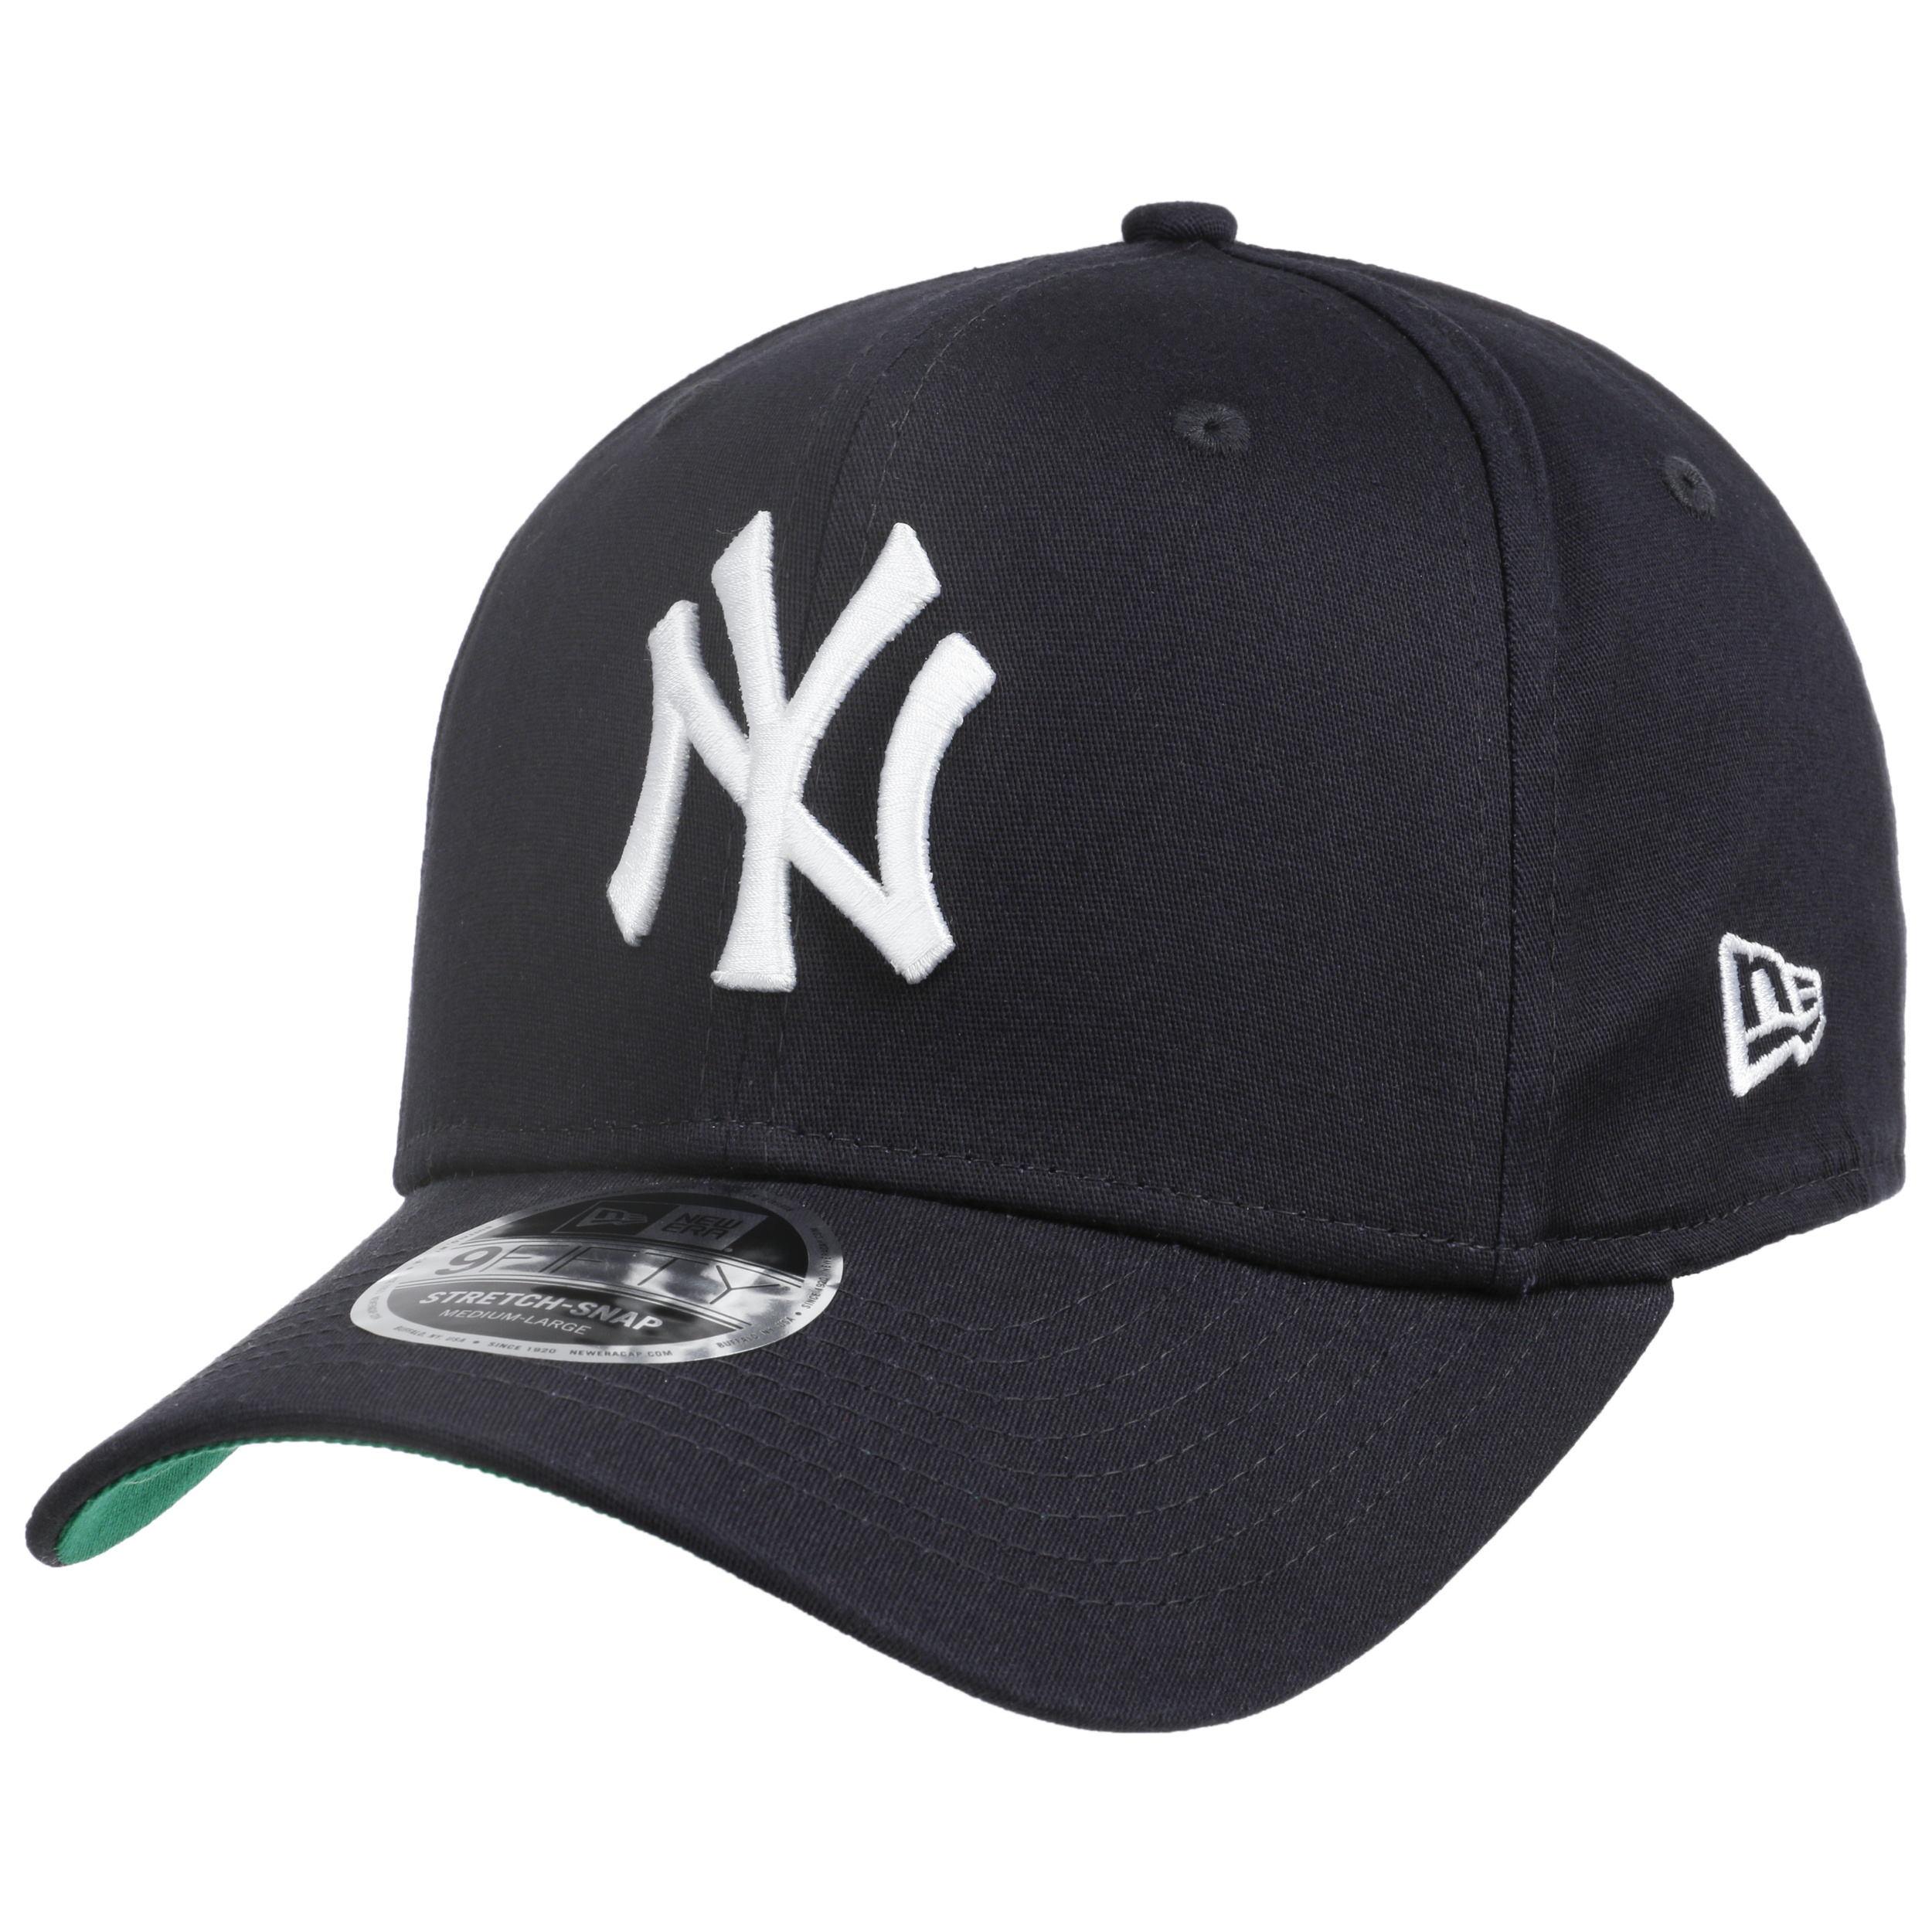 https://img.hatshopping.co.uk/9Fifty-Stretch-Snap-MLB-NY-Yankees-Cap-by-New-Era.63894a.jpg